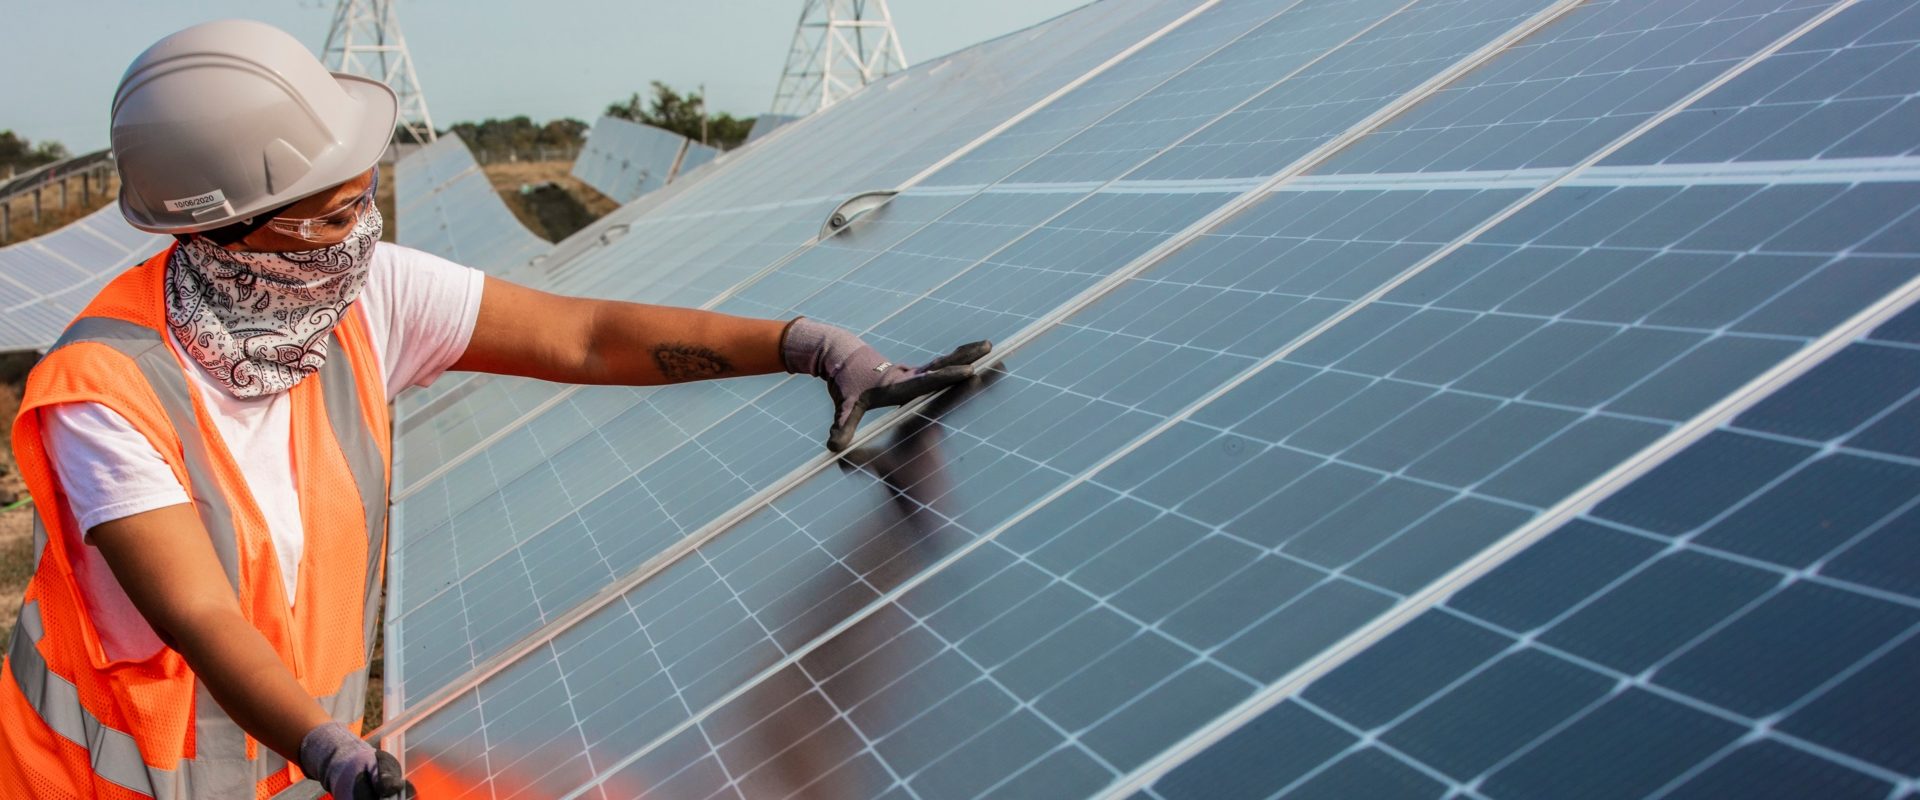 Worker holding solar panel